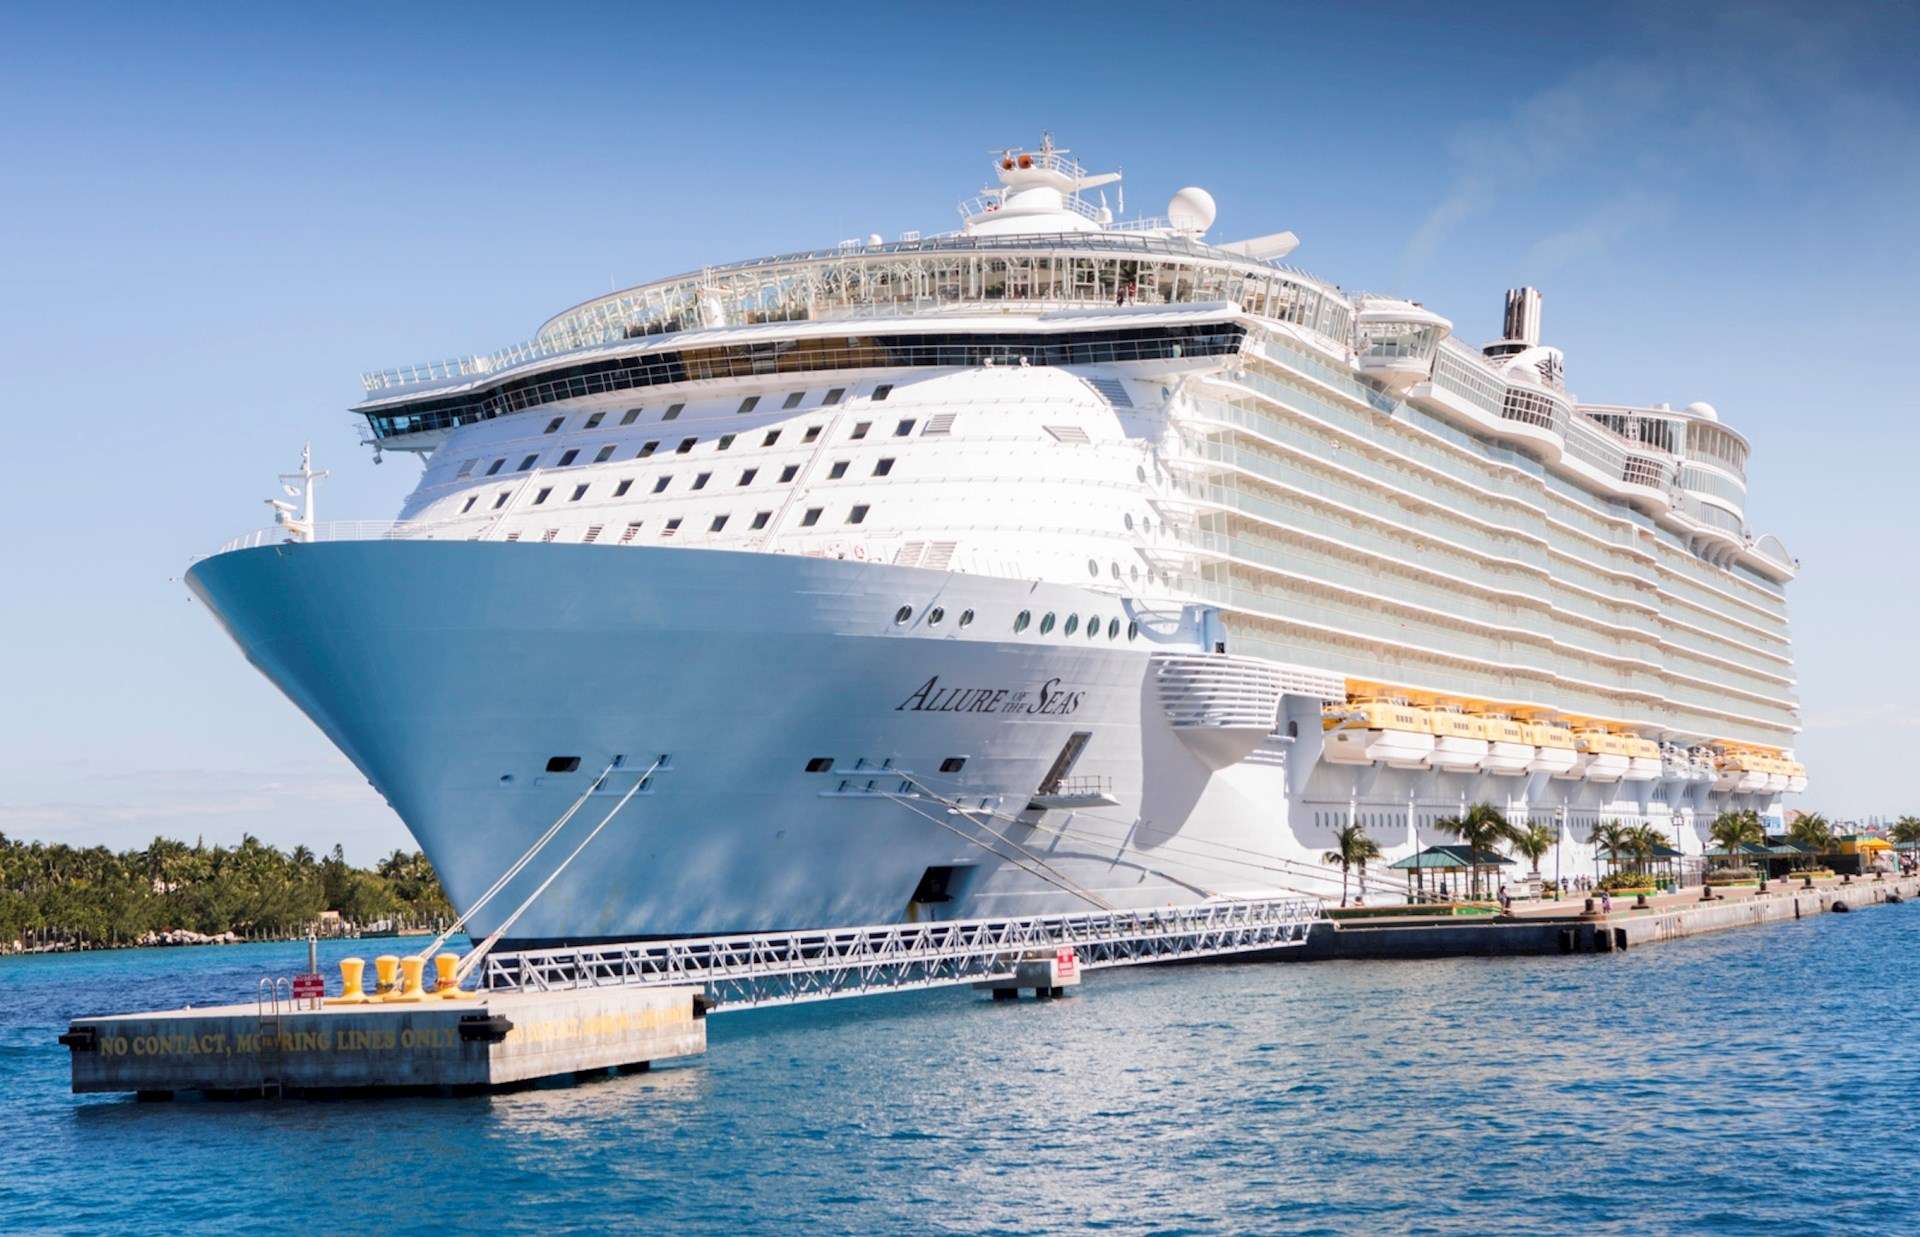 Royal Caribbean Allure of the Seas Cruise Ship 2021 / 2022